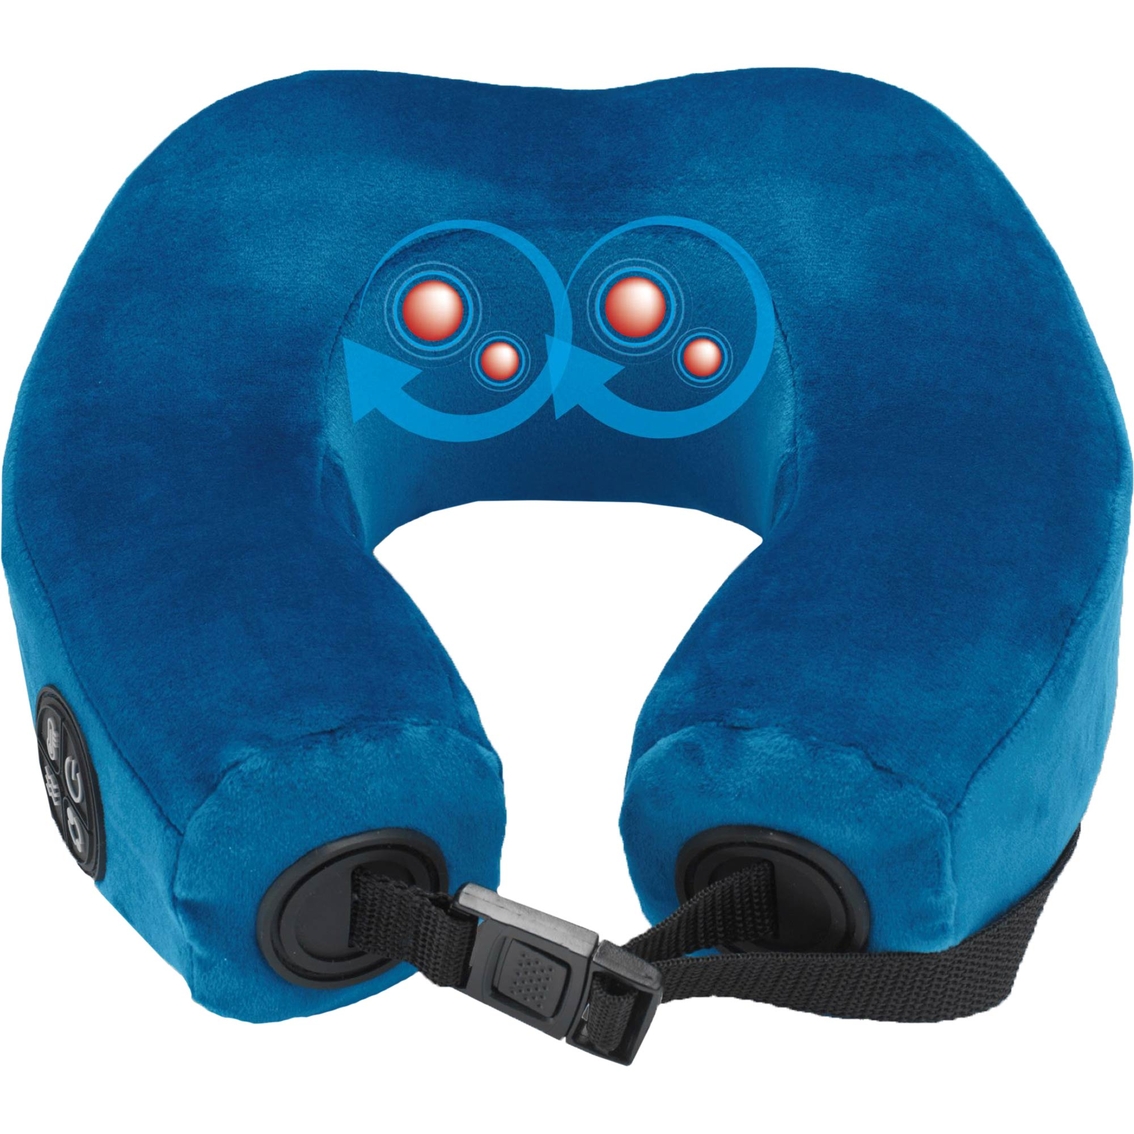 Conair Cordless Neck Rest Pillow with Shiatsu, Heat & Vibration - Image 6 of 8